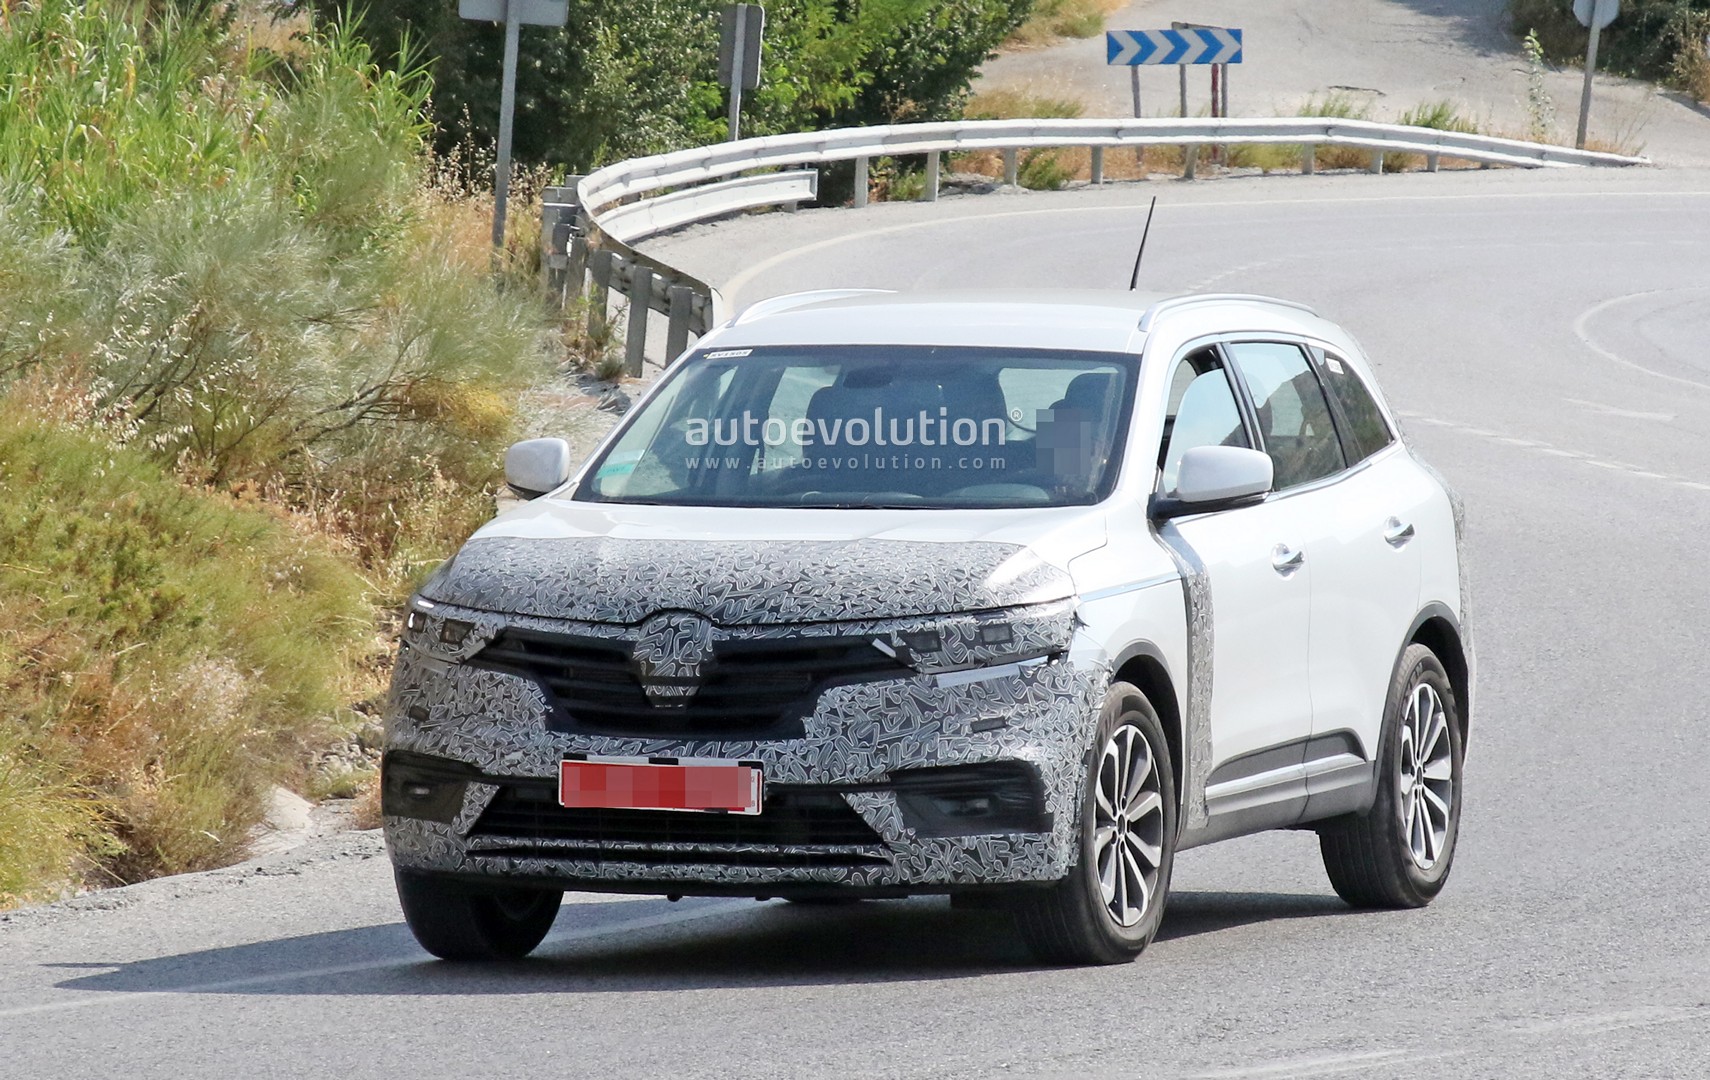 Renault Koleos Facelift Makes Spyshots Debut - autoevolution